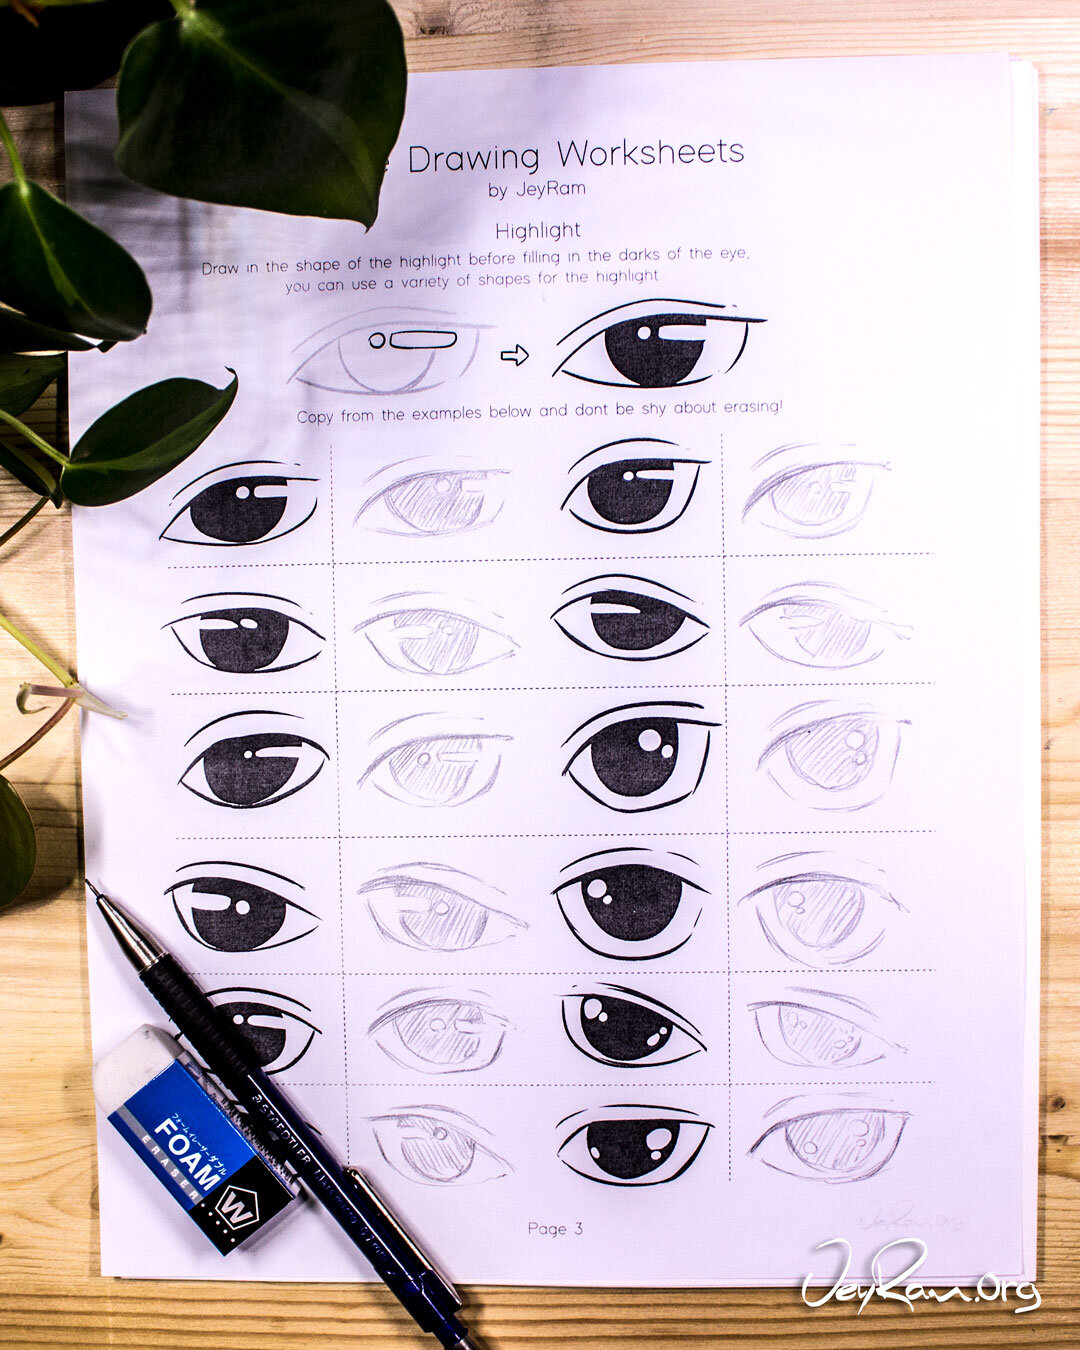 How to Draw Eyes, Tutorial and Free Printable Worksheet by JeyRam #Art #Drawing #Tutorial #Eyes